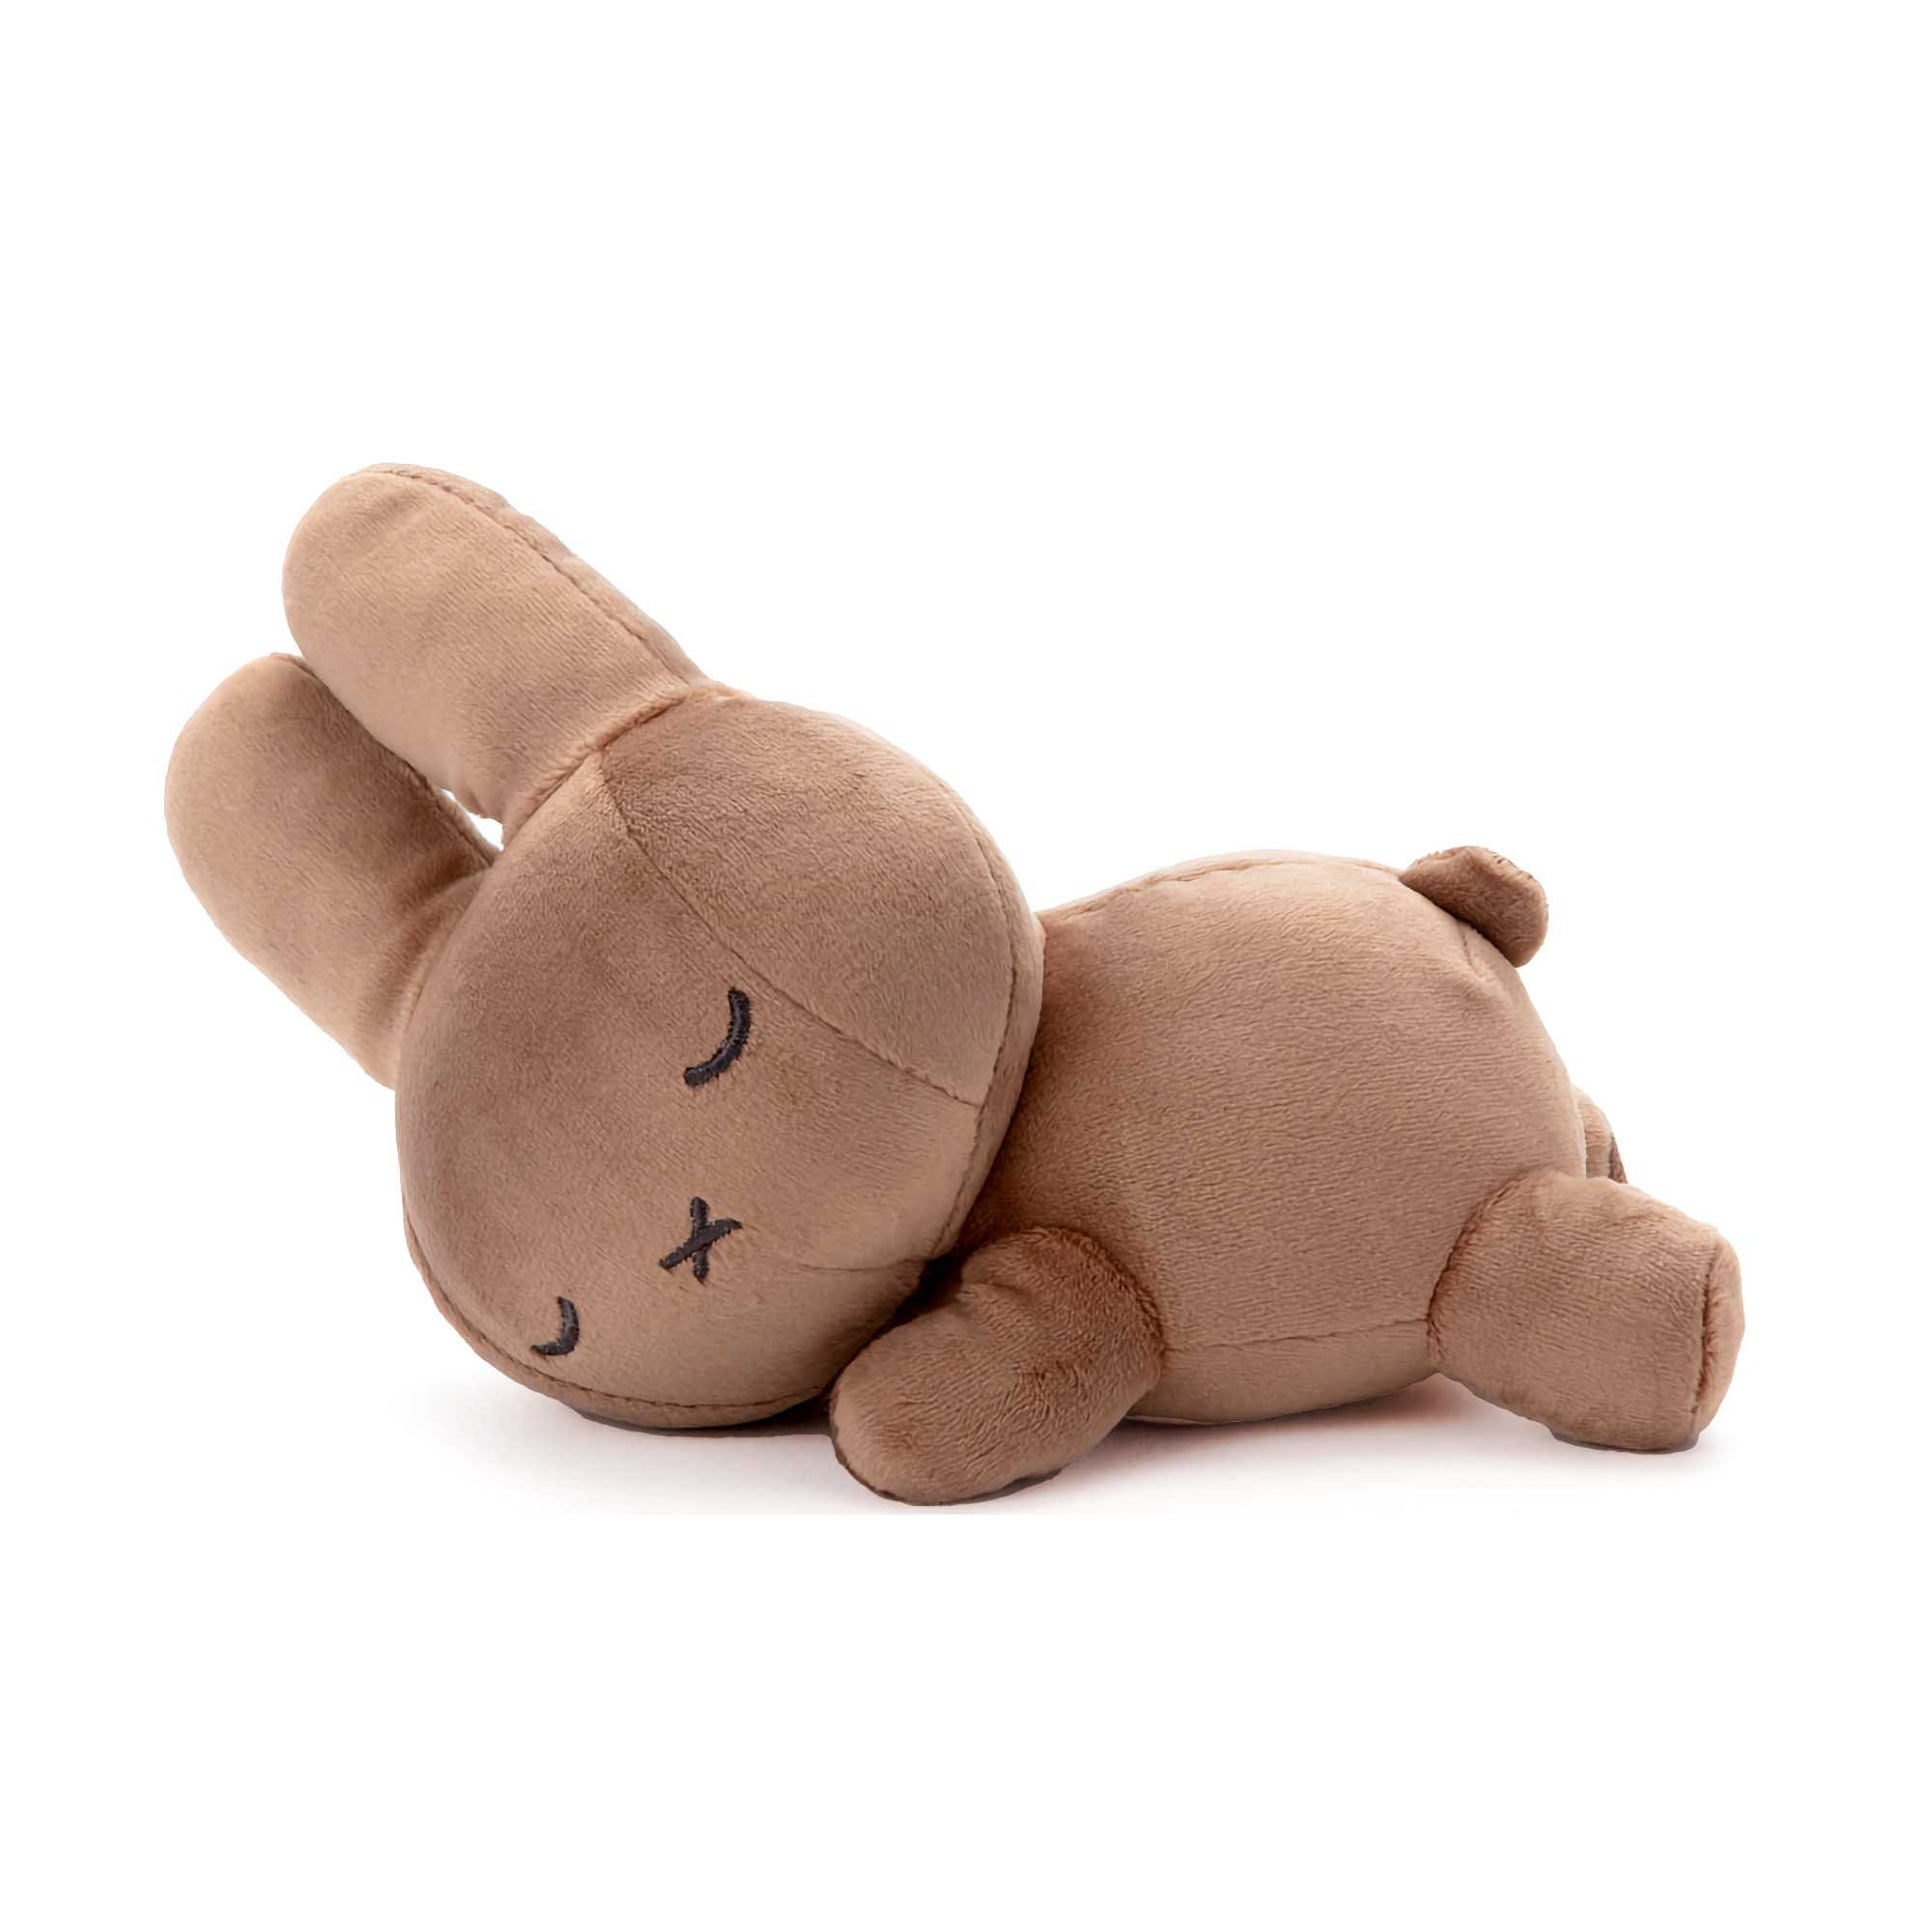 Miffy Sleeping Friend Plush Toy Small (19cm), Brown